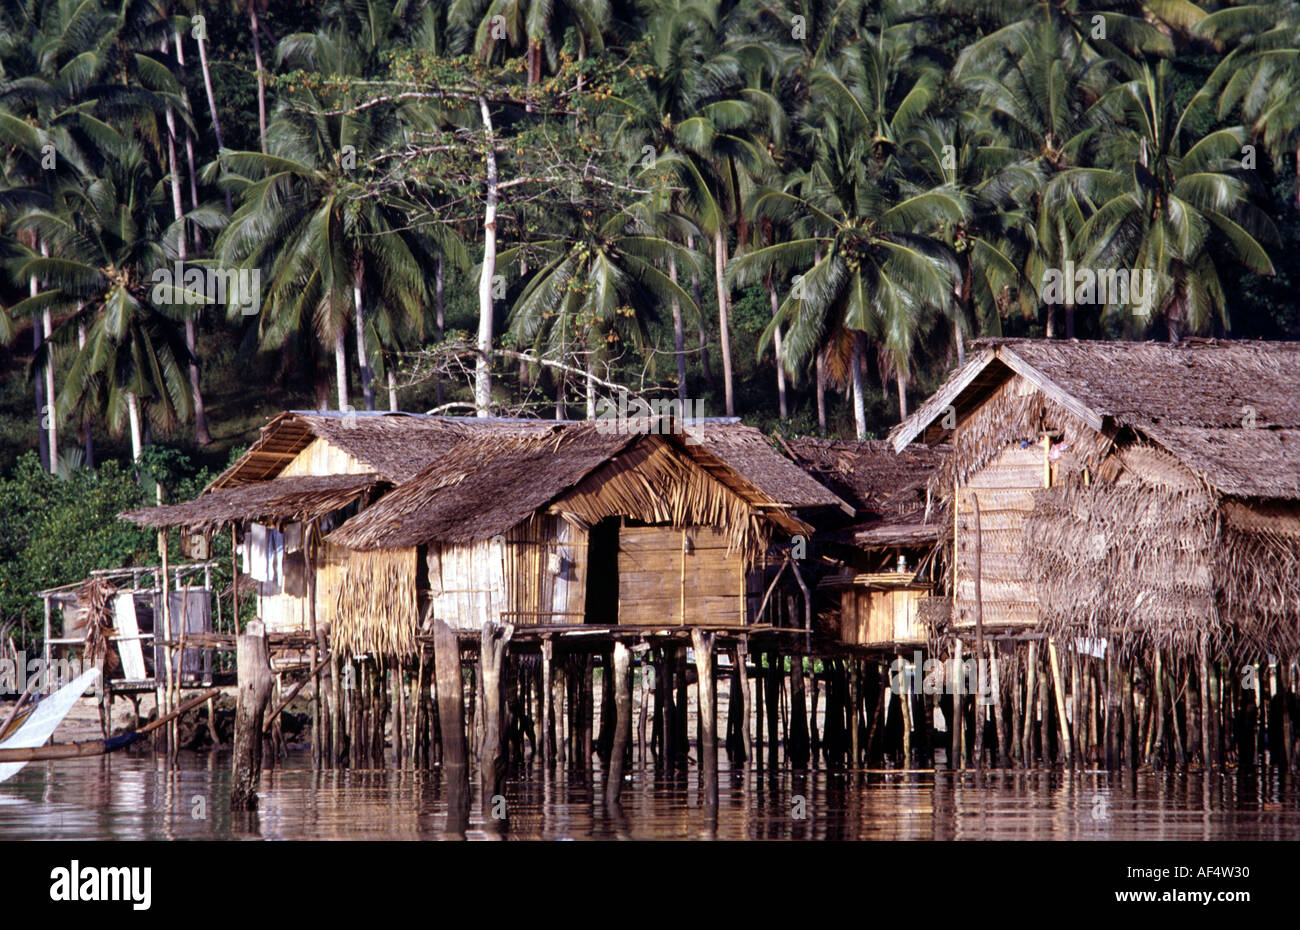 Filipino Village